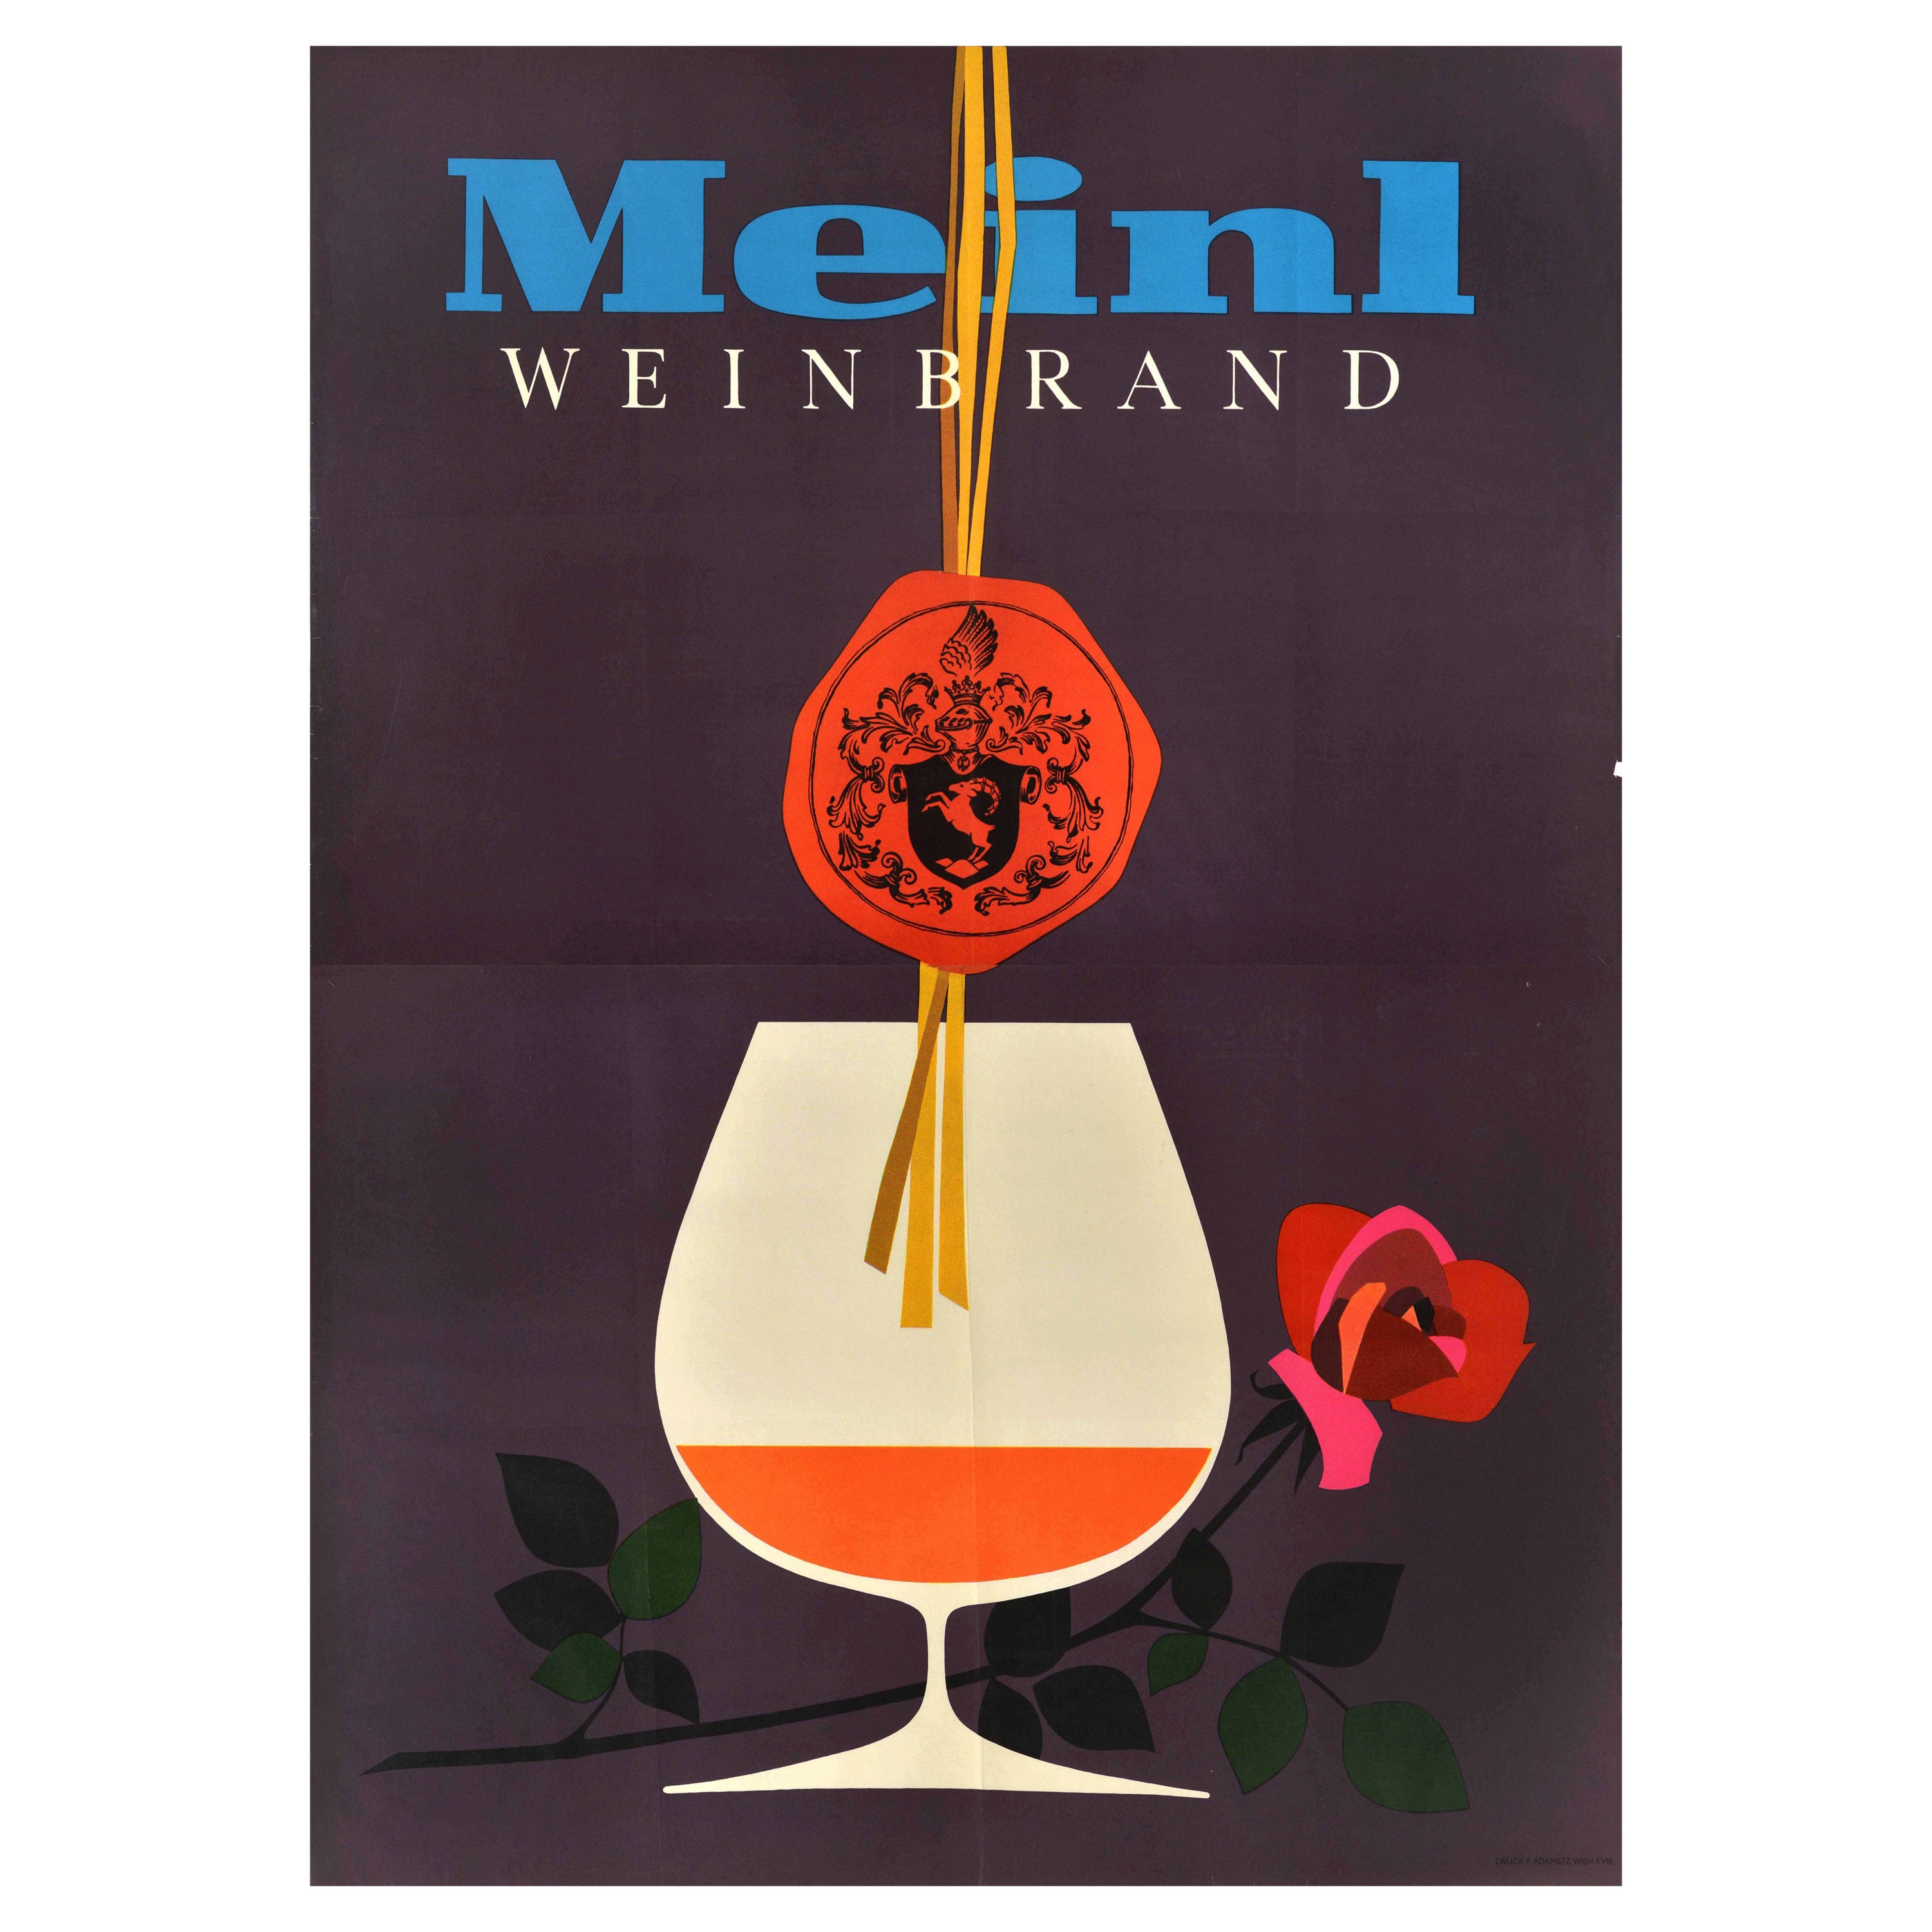 Original Vintage Drink Advertising Poster Meinl Weinbrand Brandy Cognac Alcohol For Sale